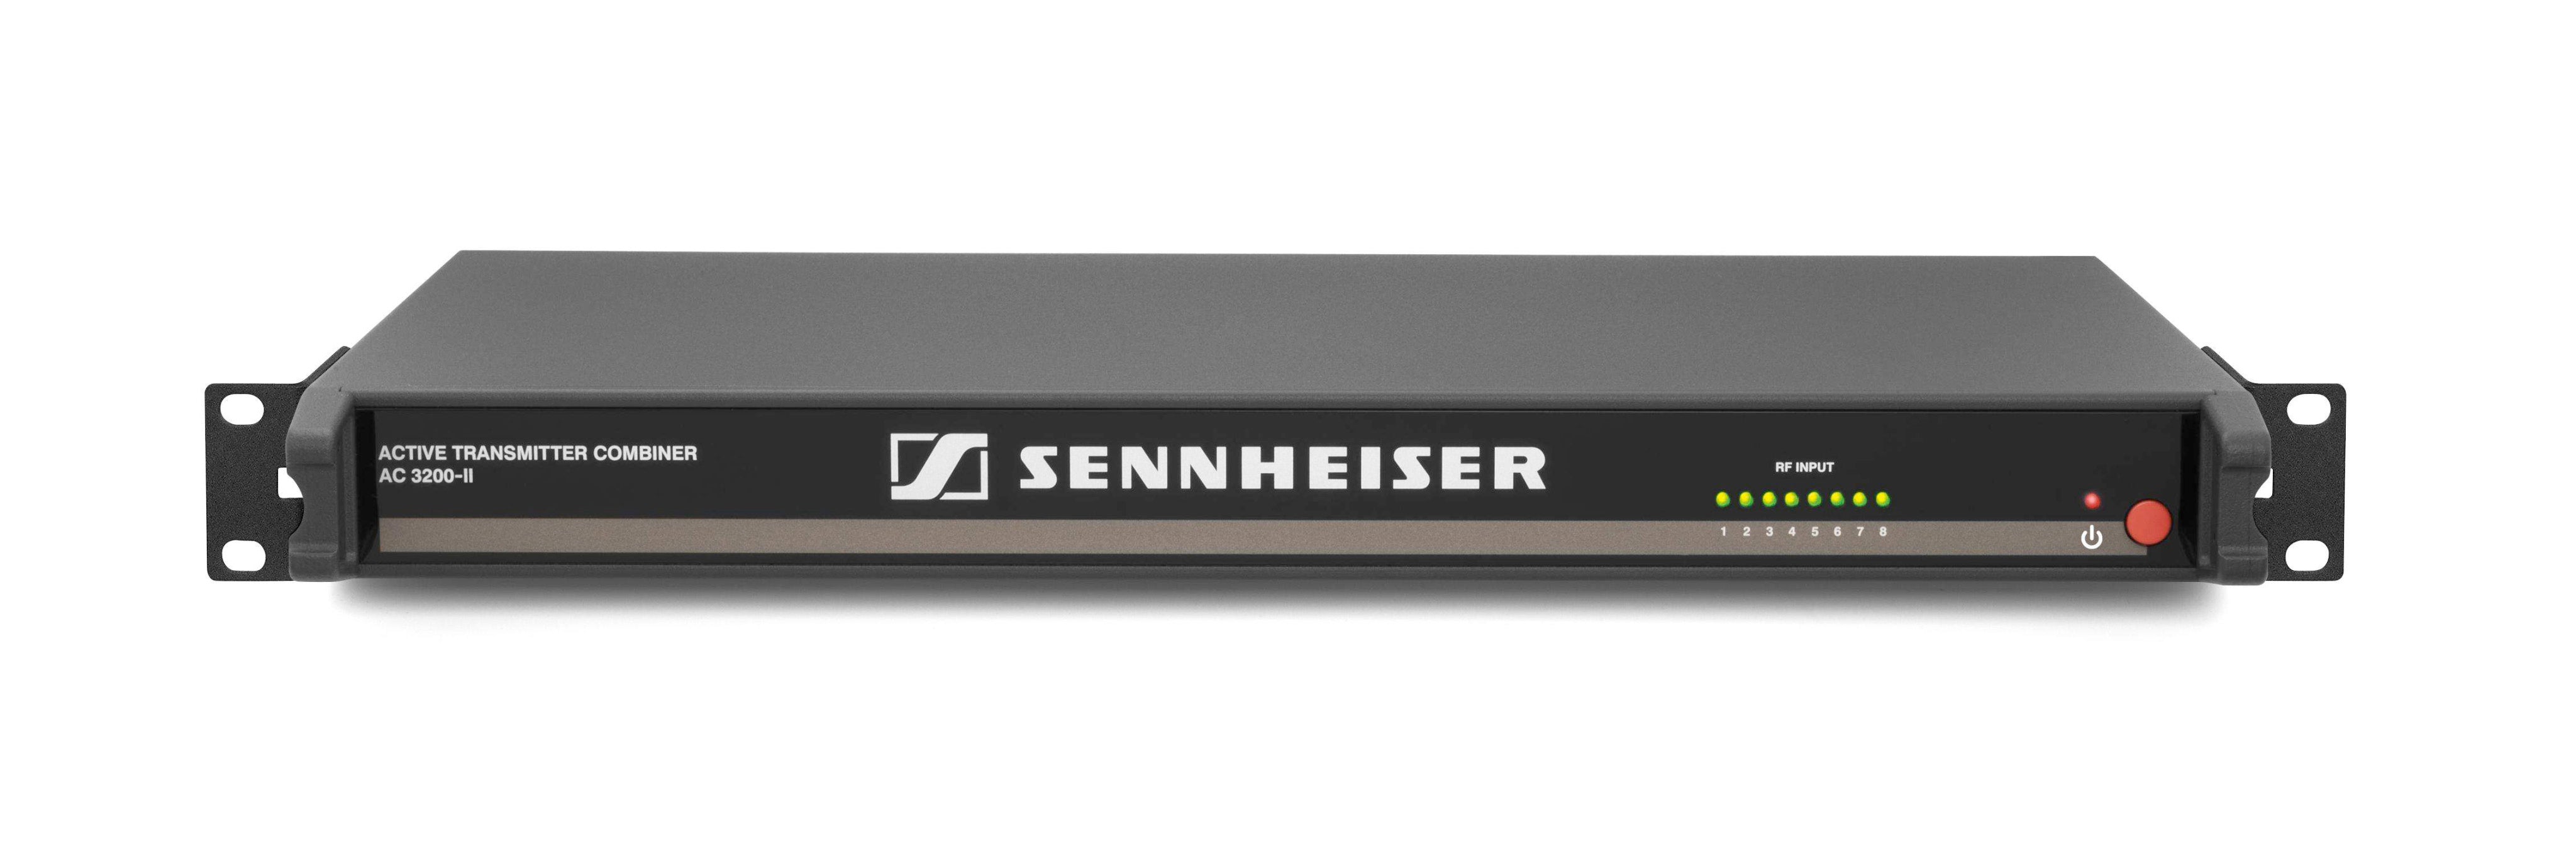 SENNHEISER AC 3200-II Active antenna combiner 8 units